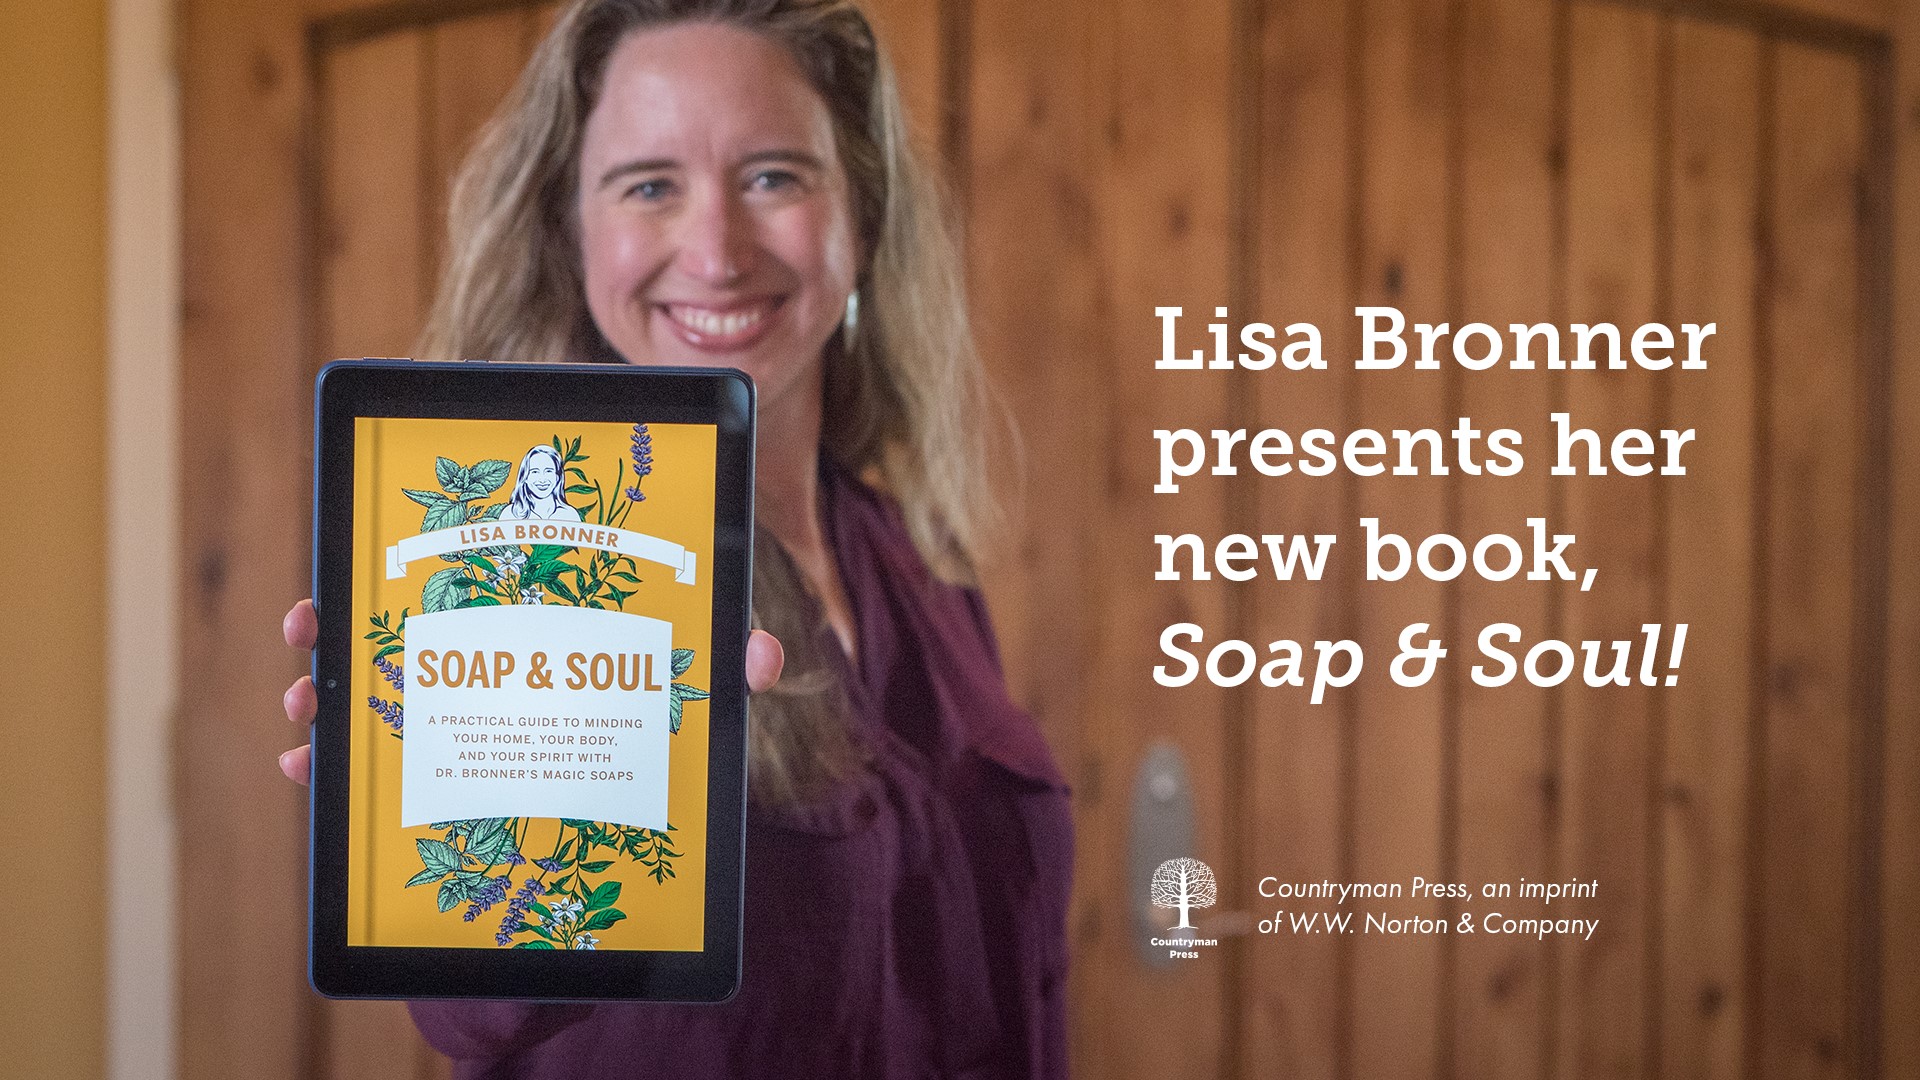 Lisa Bronner Book - Soap & Soul - book trailer - Dr. Bronner's guide